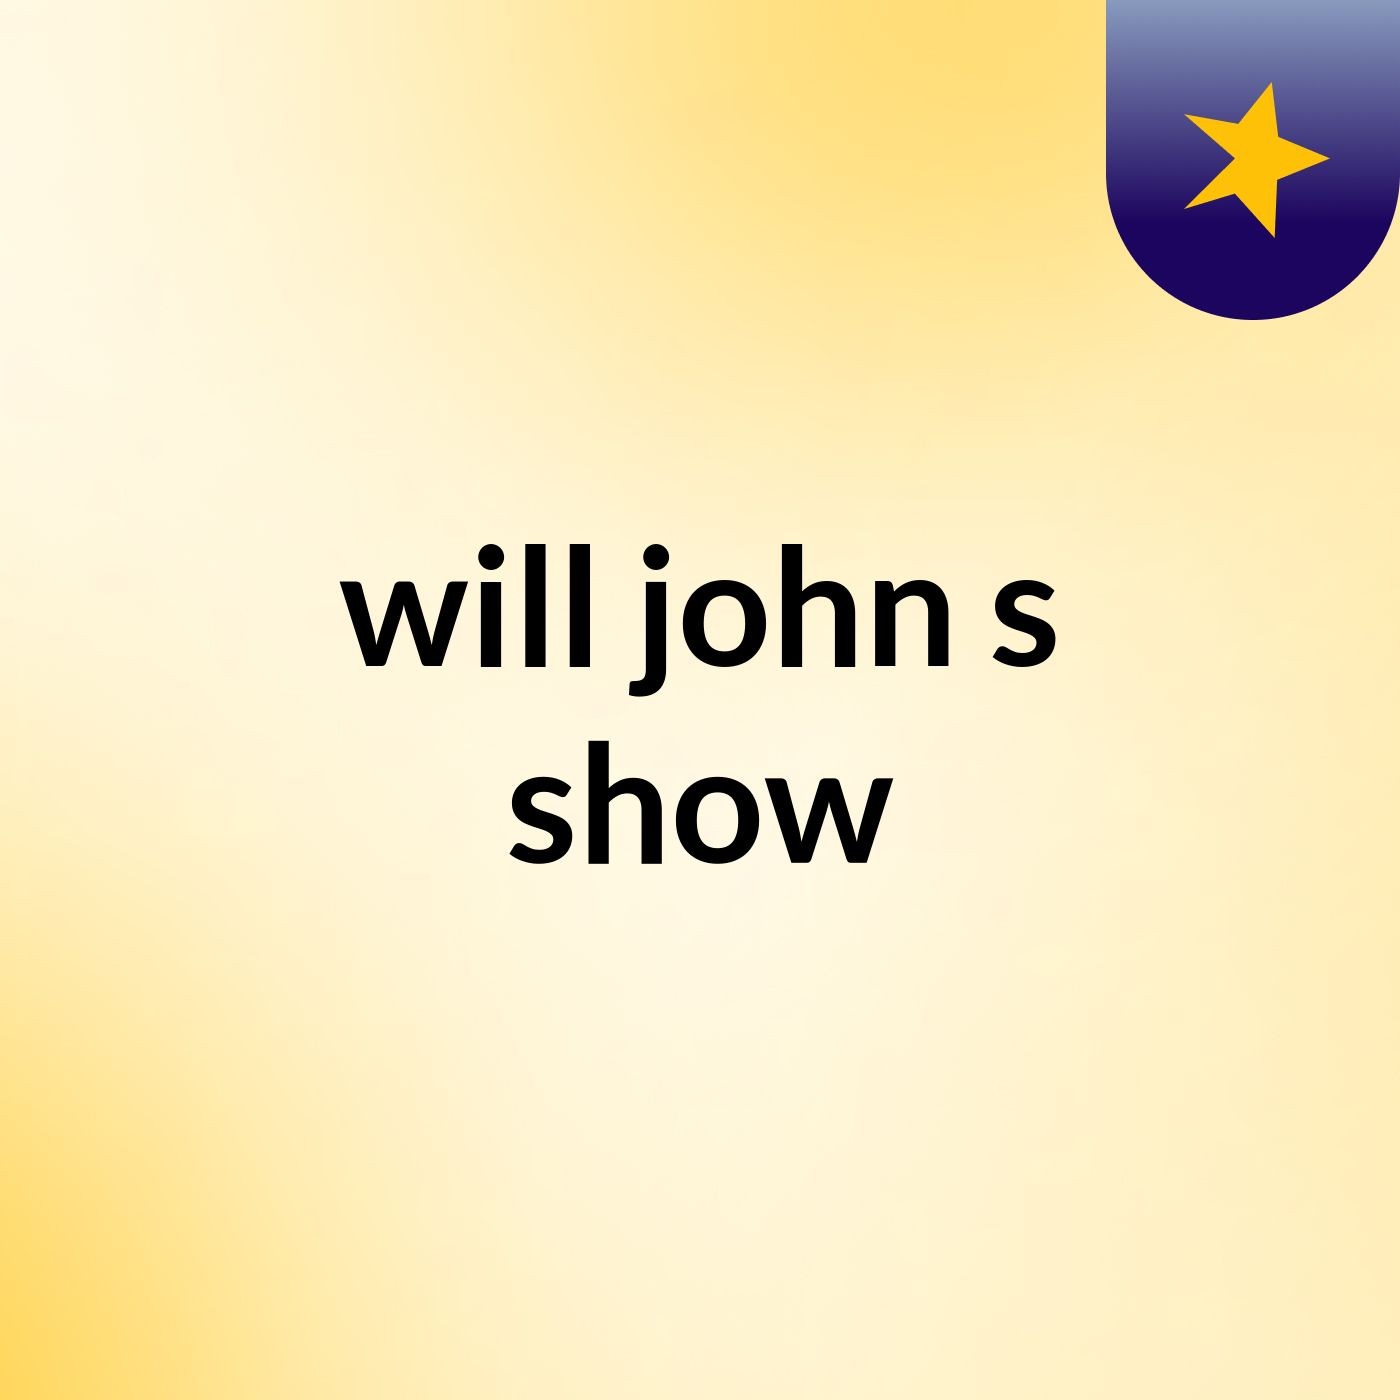 will john's show